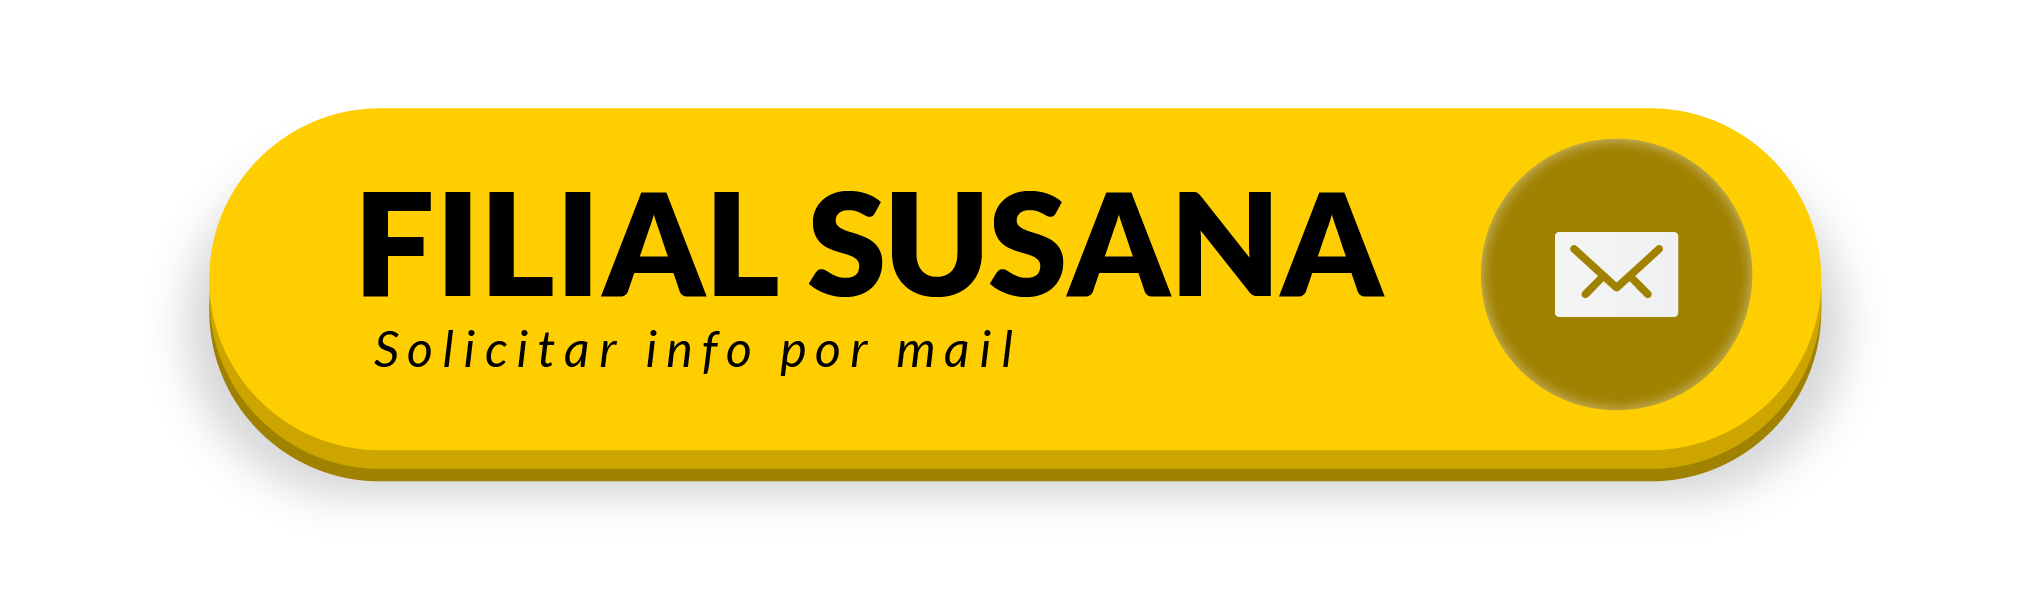 Filial Susana - Solicitar info de préstamo Tremblay por mail - Mutual del Club Atlético Pilar-01